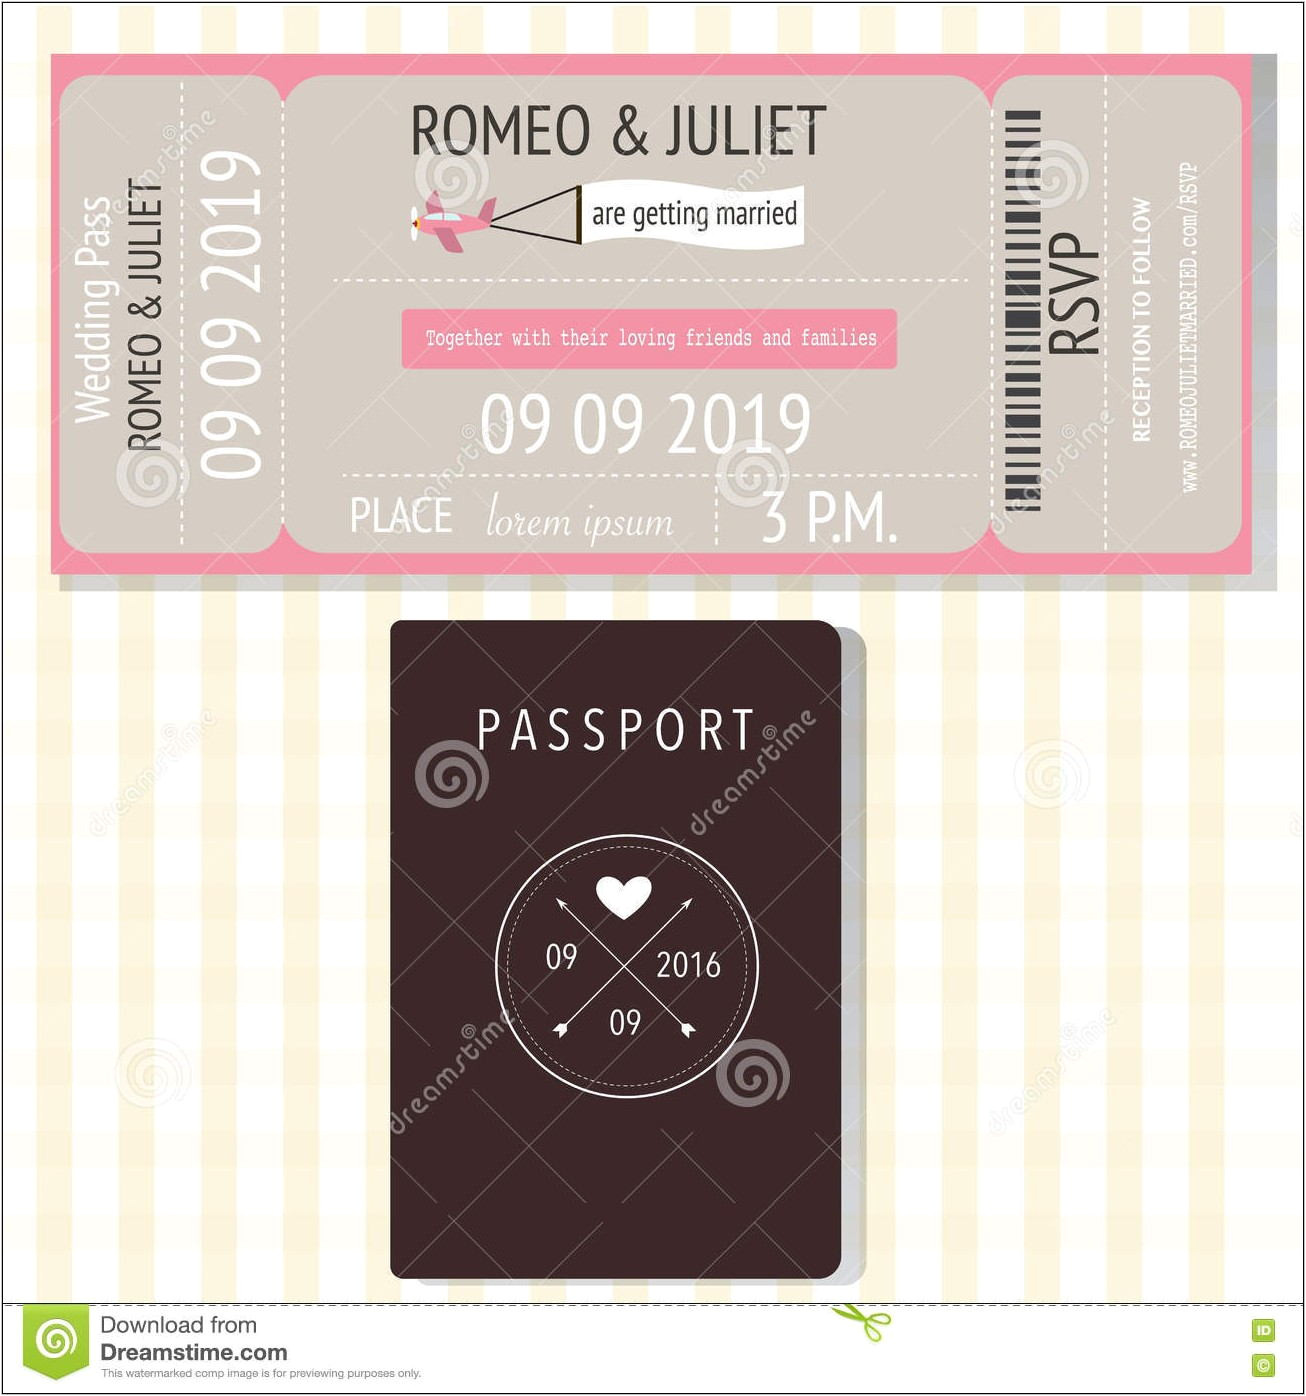 passport invitation template download